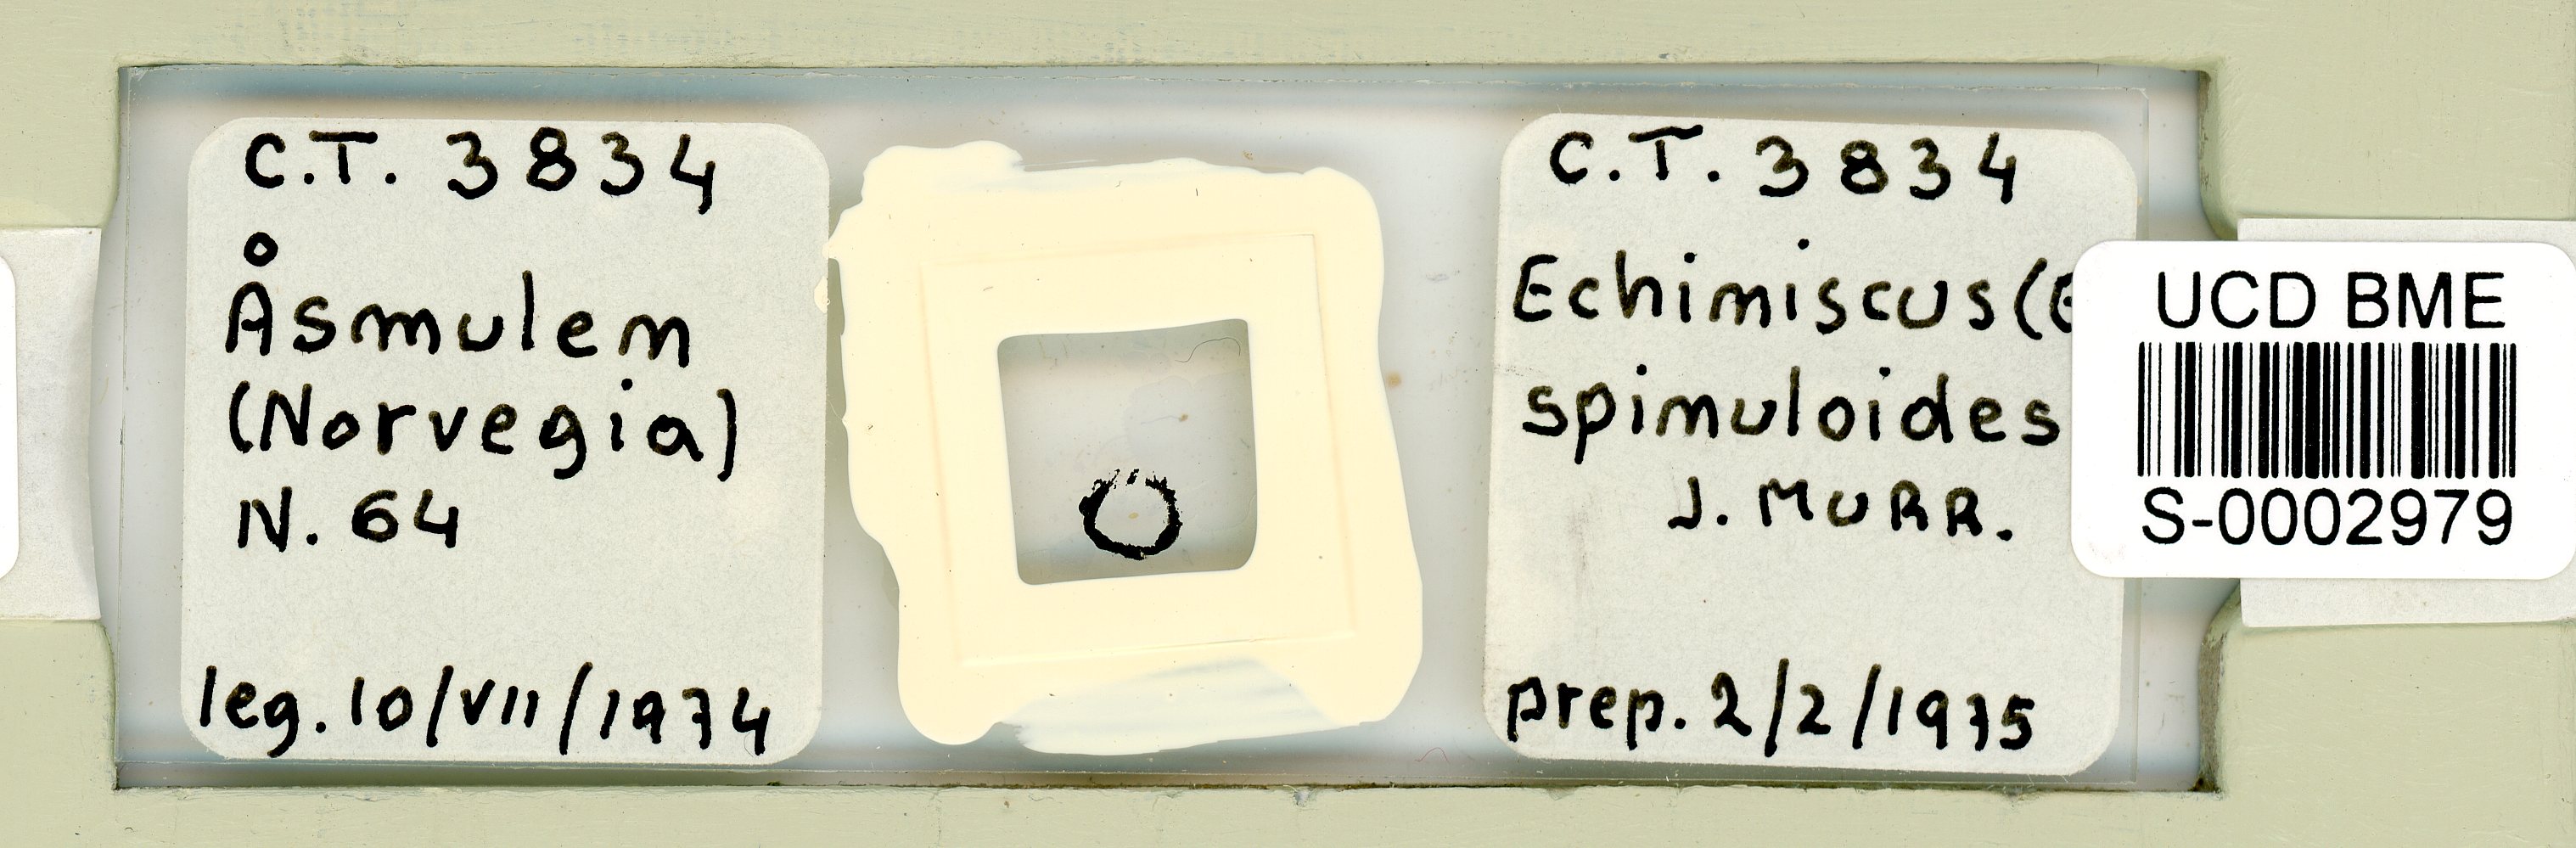 Testechiniscus spinuloides image